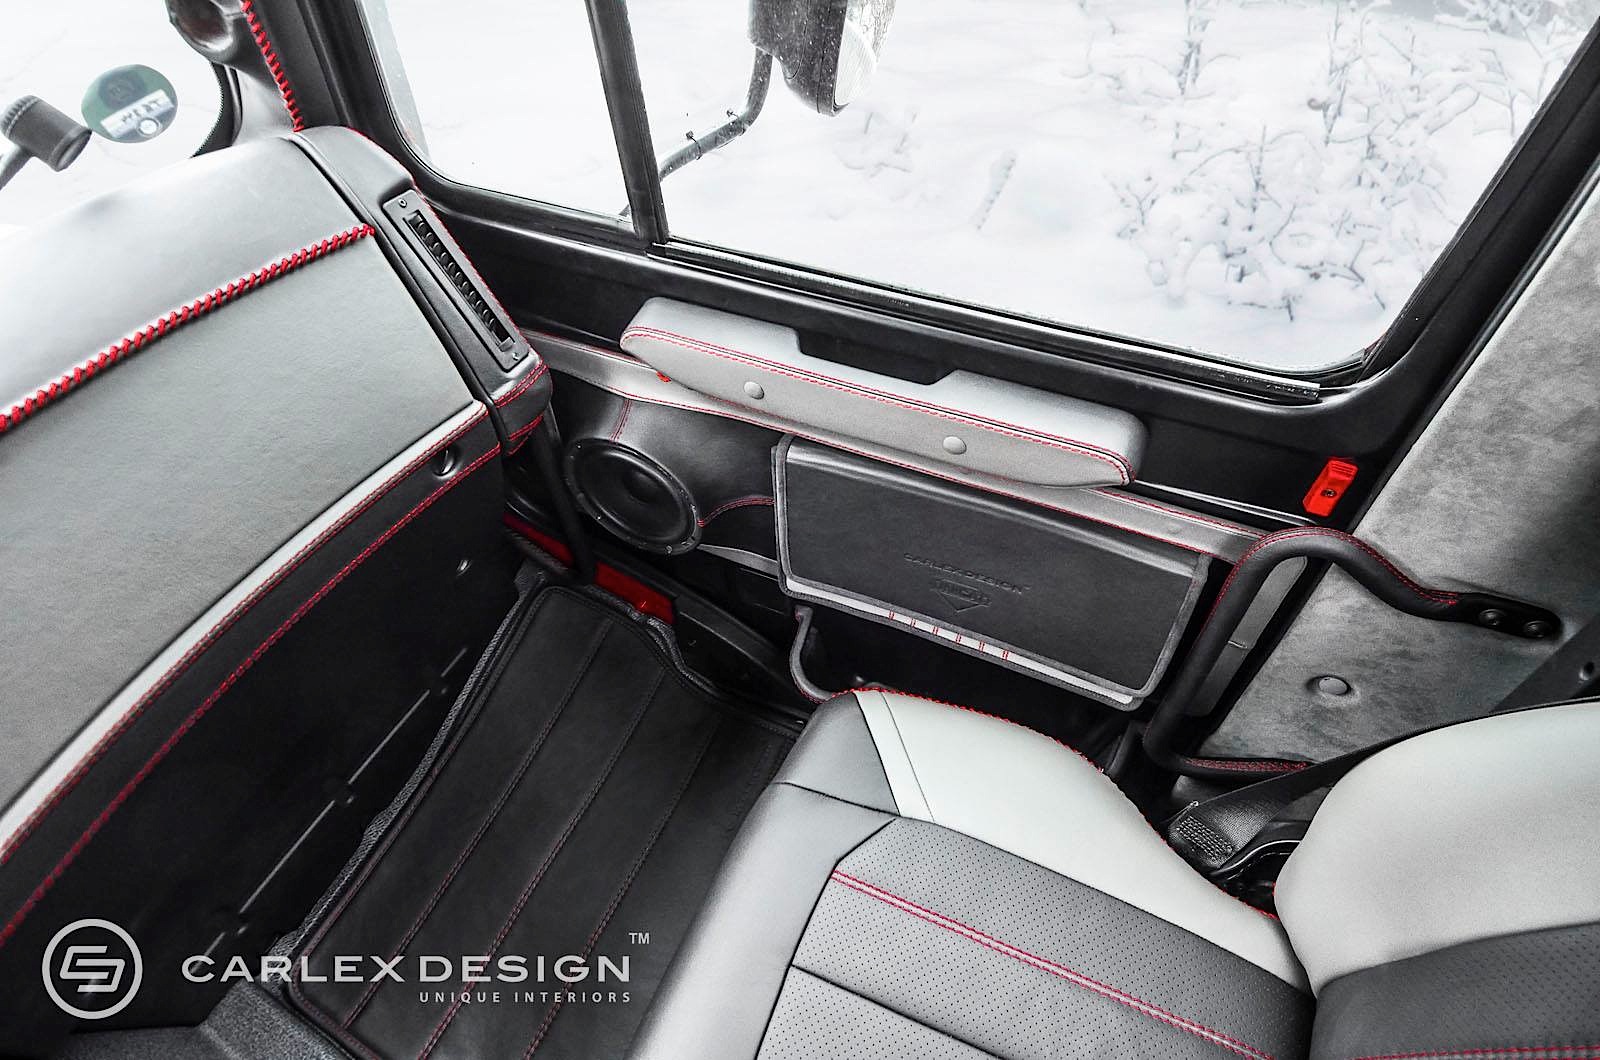 Mercedes Benz Zetros 6x6 Gets Opulent Interior From Carlex